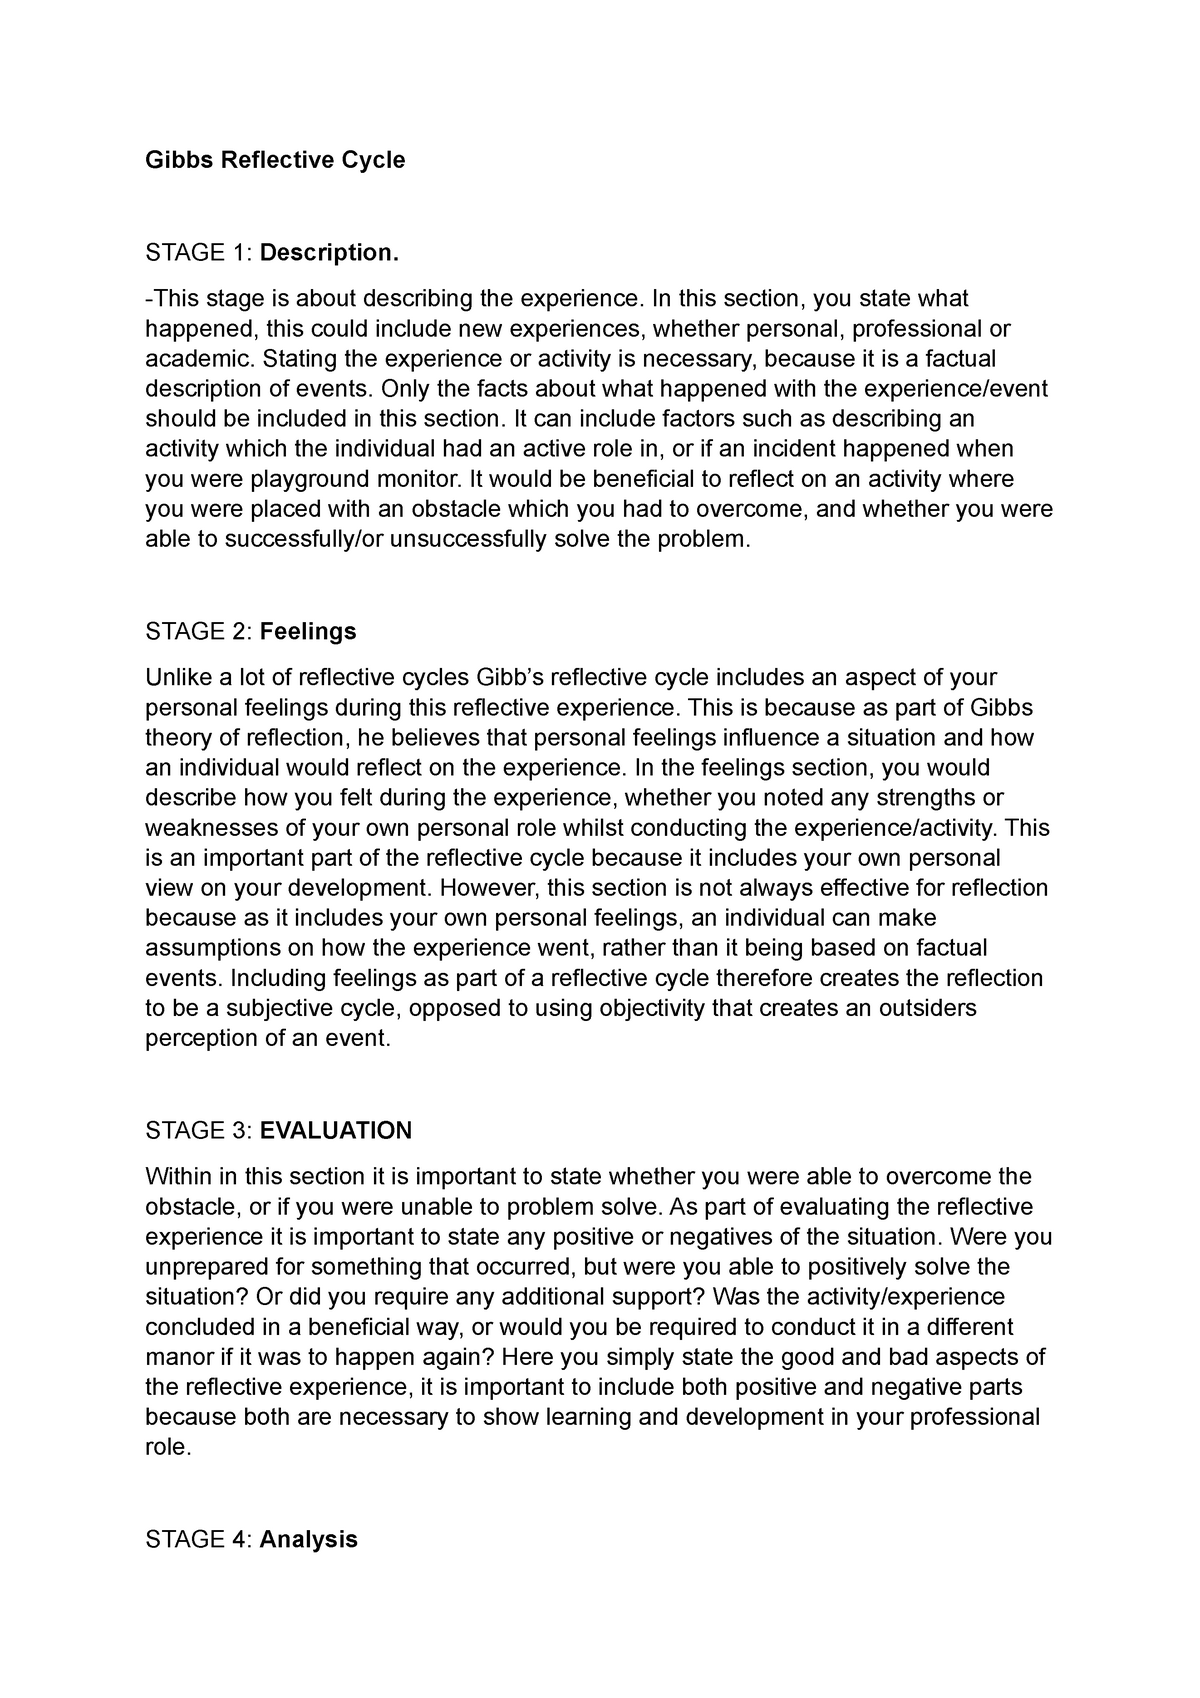 reflective essay example using gibbs